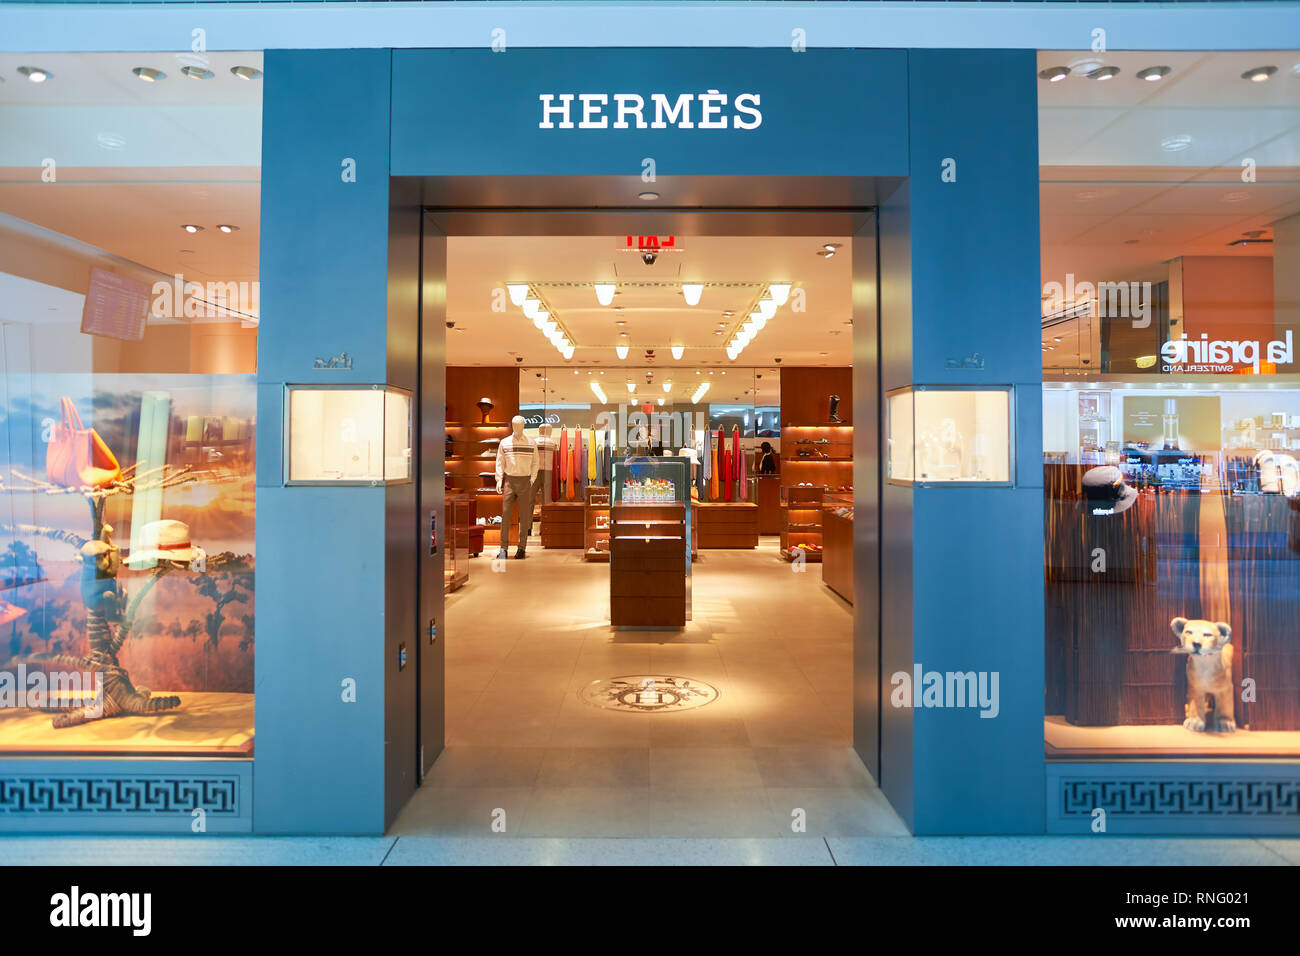 NEW YORK - APRIL 06, 2016: Hermes store in JFK Airport. Hermes ...